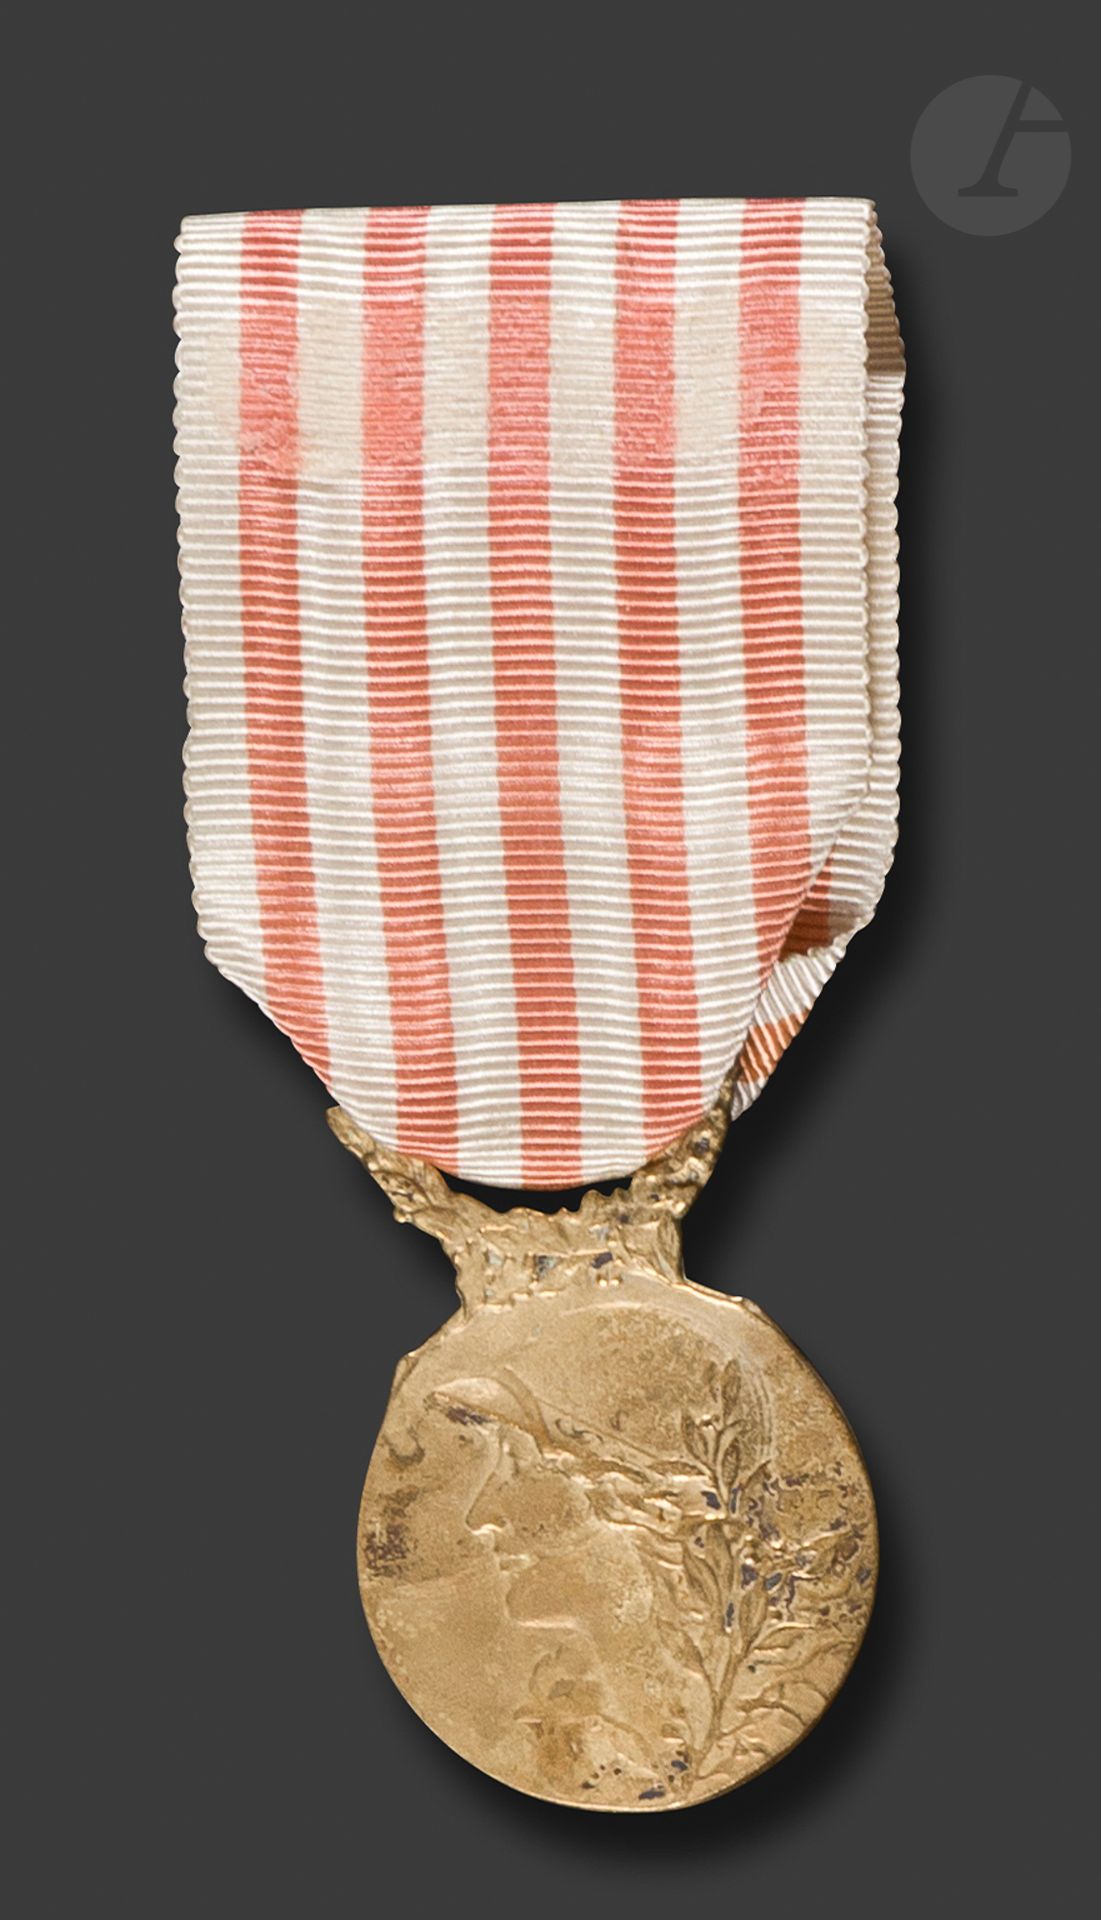 Null 法国
1914-1918年纪念章。
罕见的查尔斯模型，青铜质地（有旧的镀银痕迹），有叶子的贝利耶尔。丝带。
46 x 29 mm
T.T.B



.